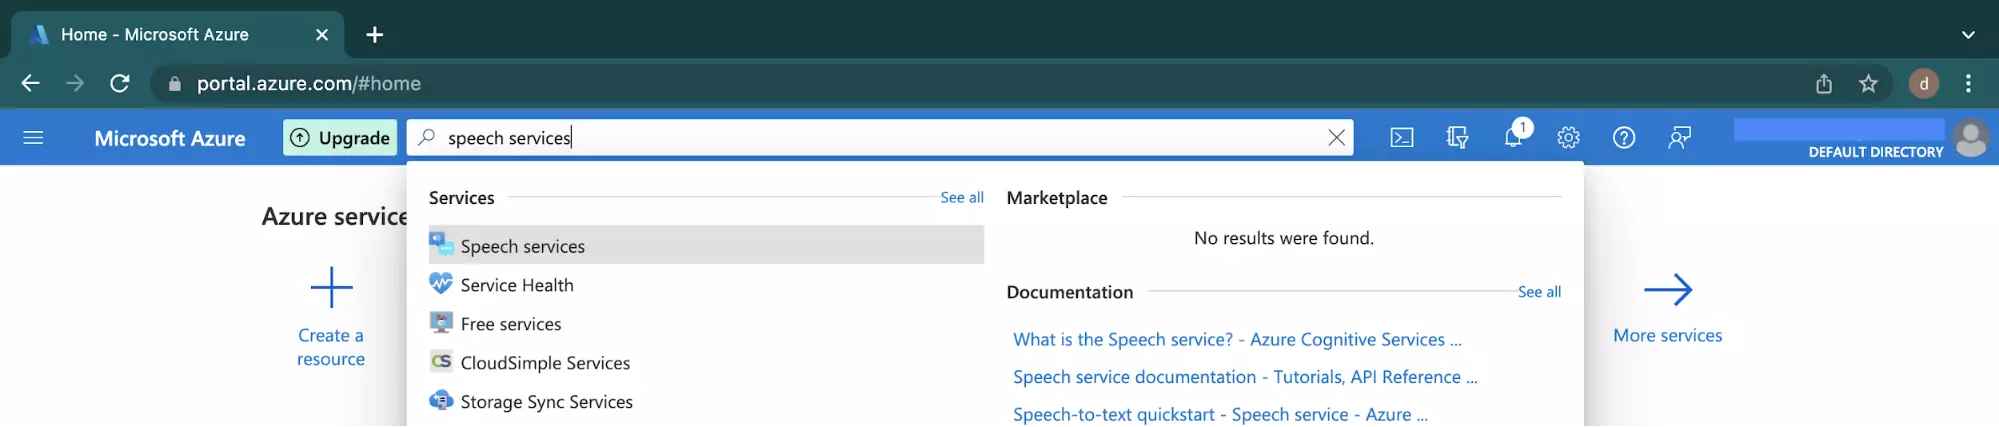 Screenshot of Microsoft Azure search bar 